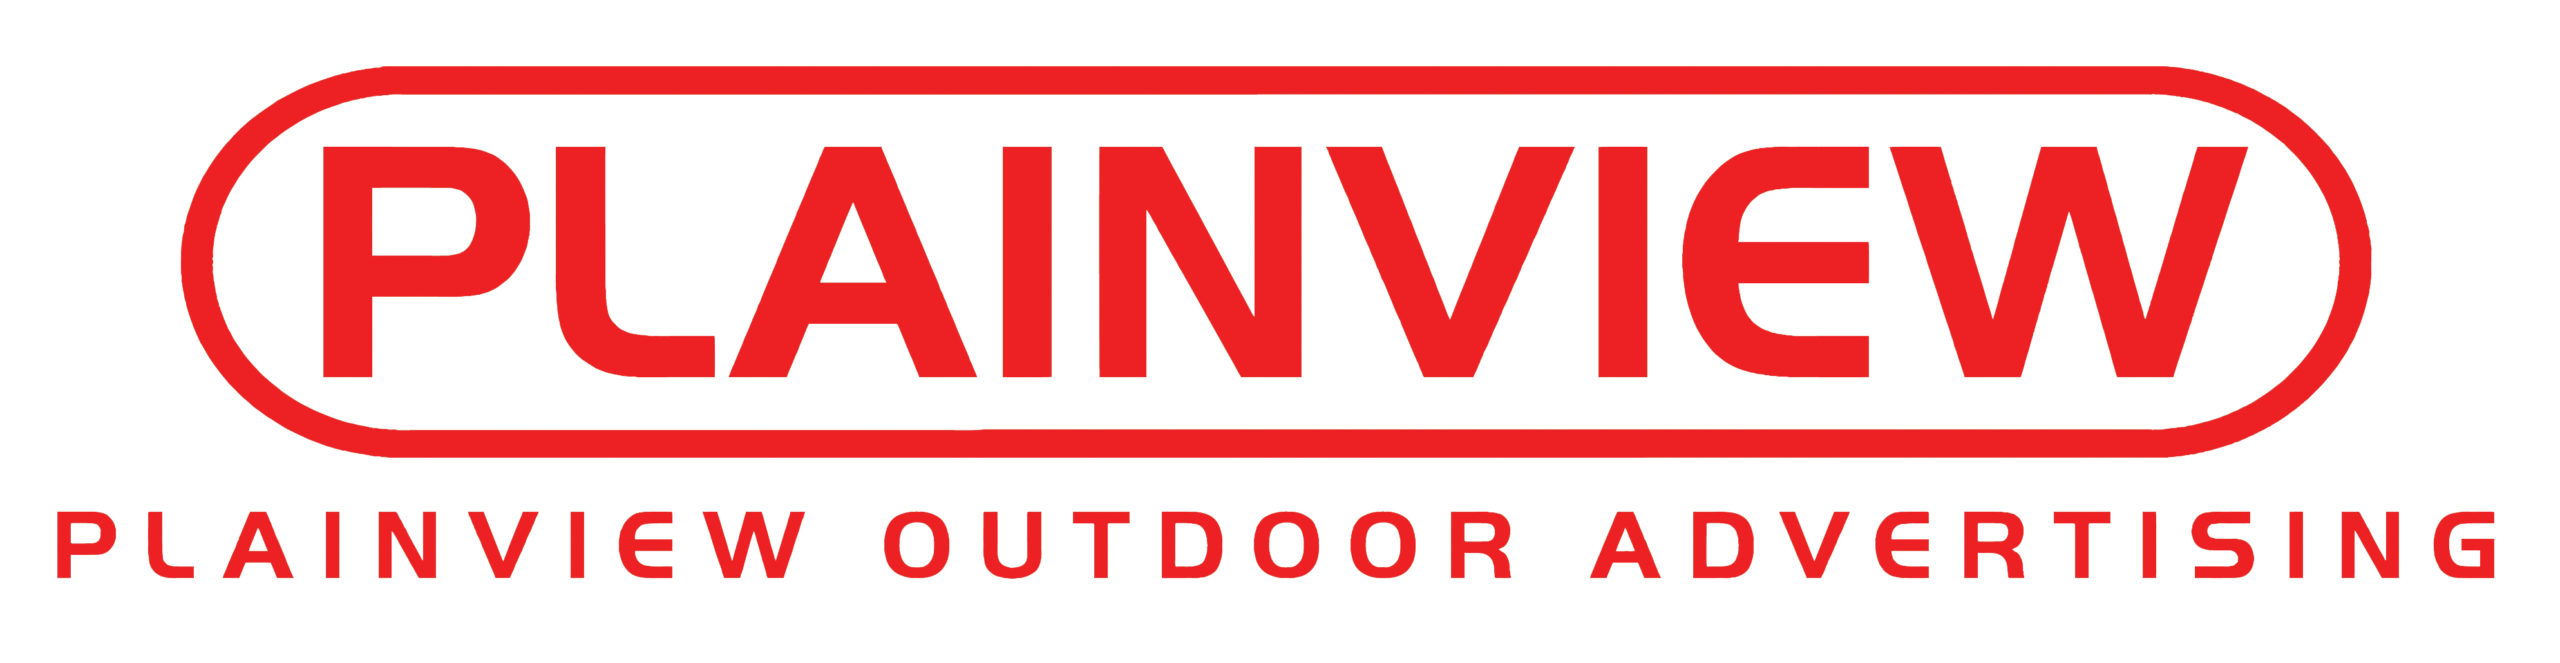 Plainview Outdoor Advertising Logo